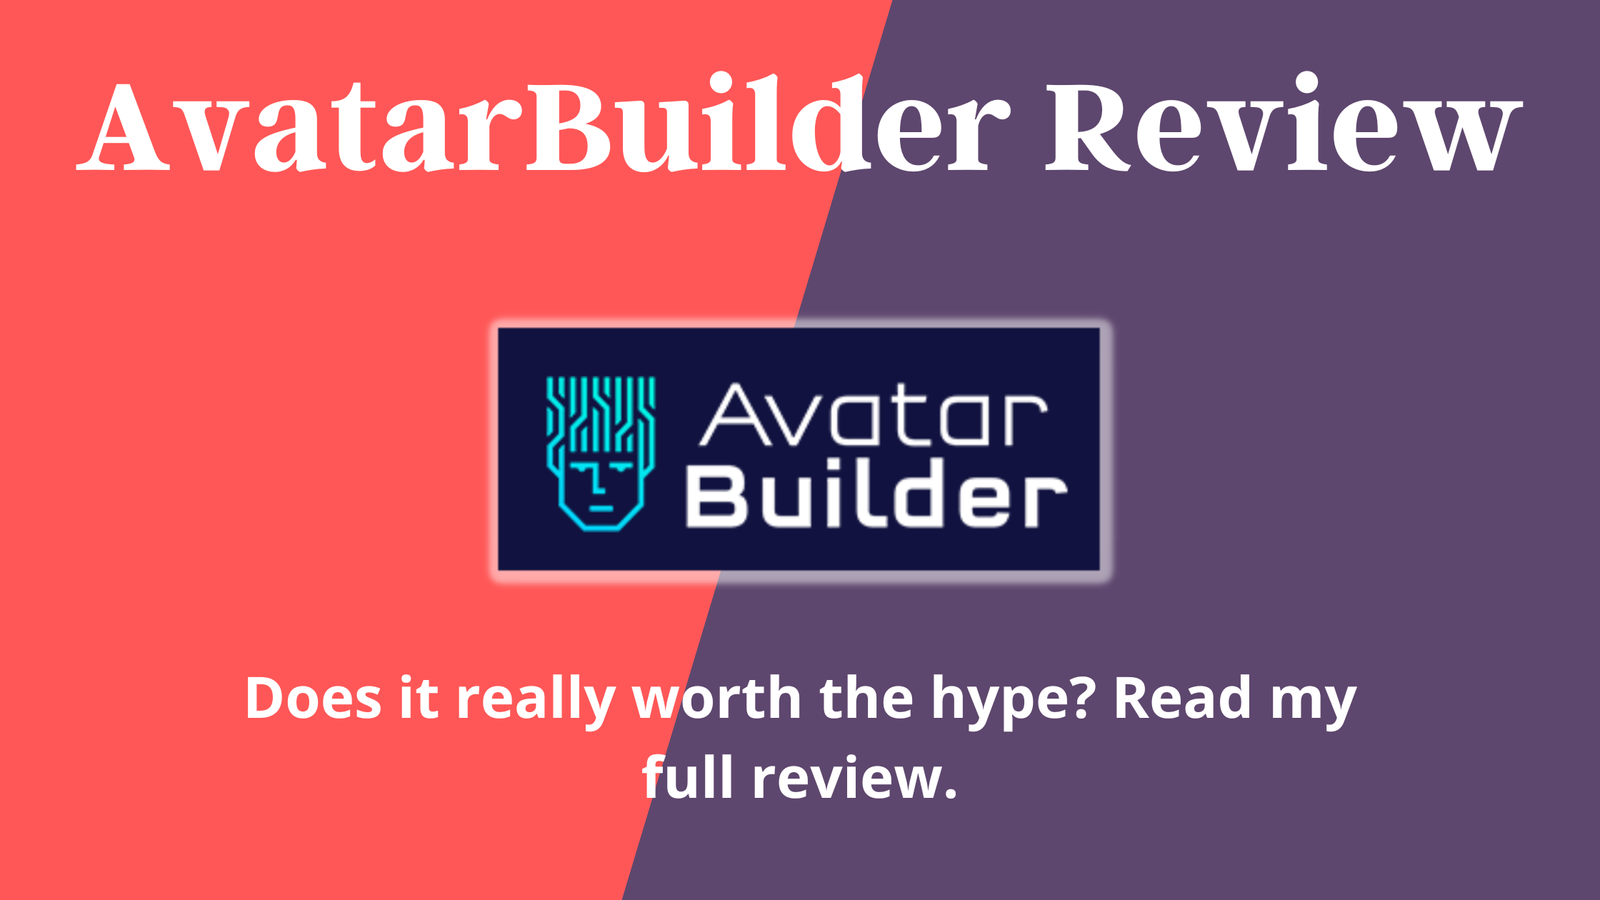 AvatarBuilder Review